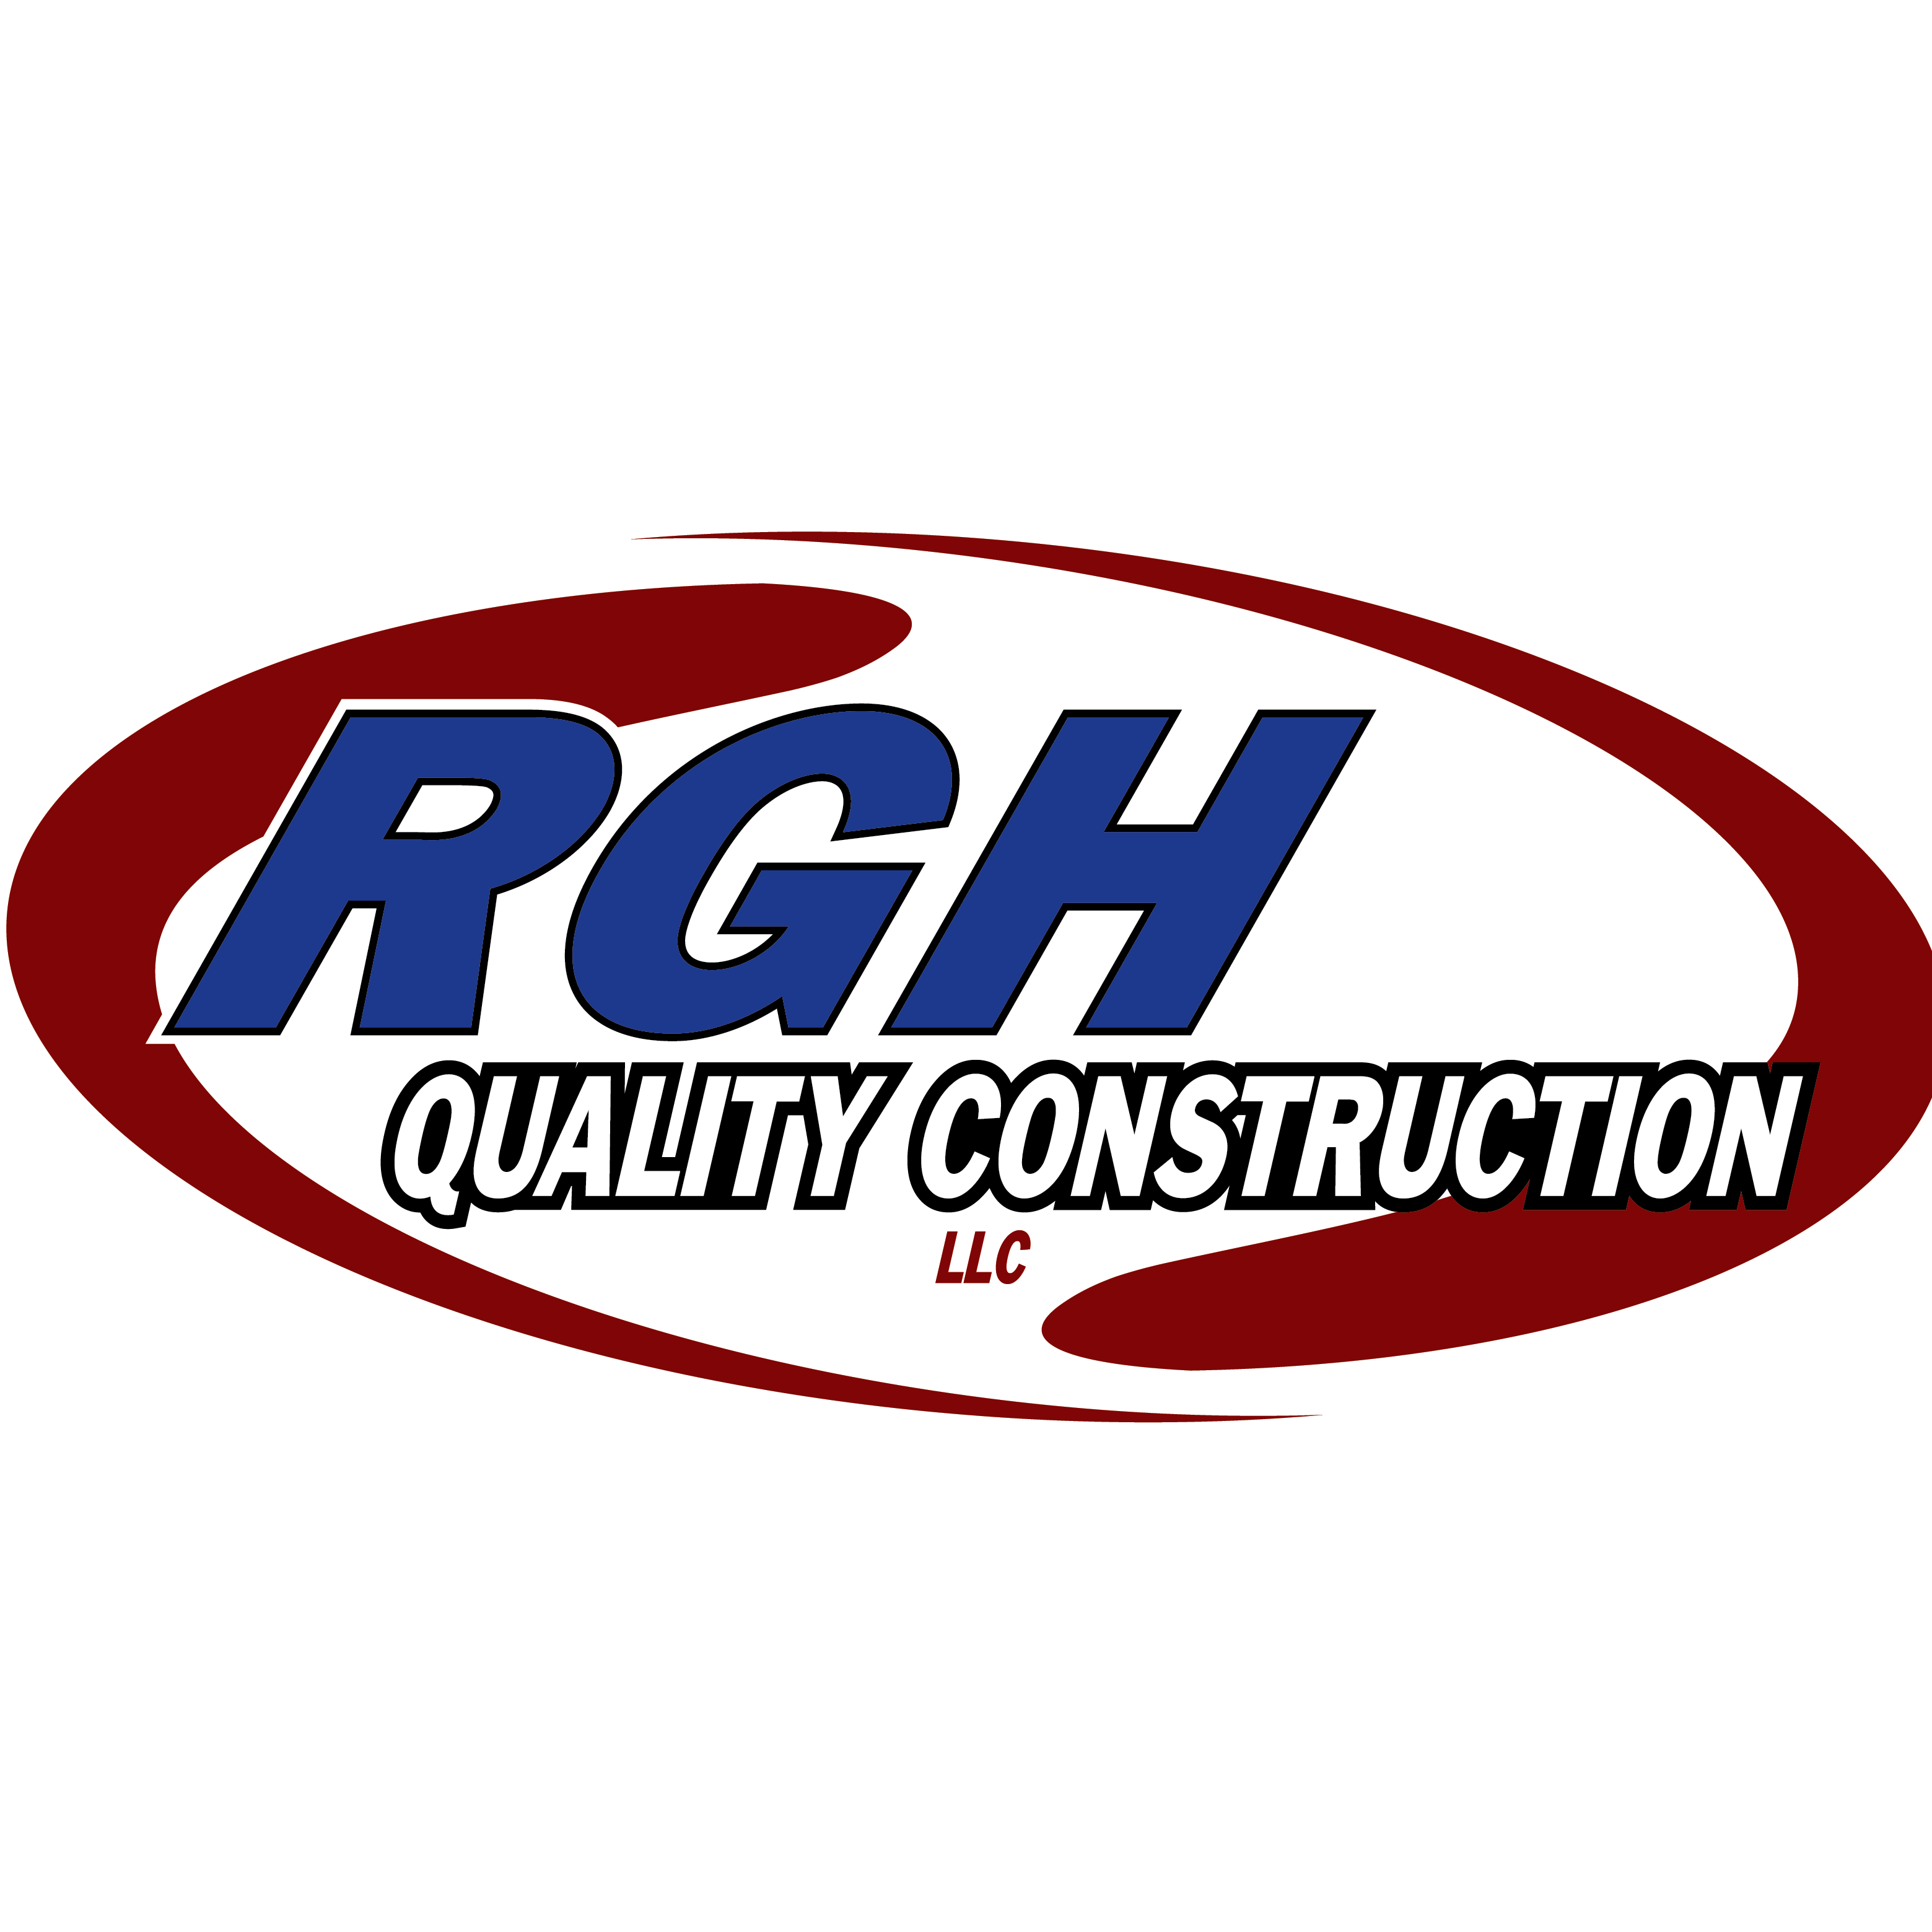 RGH Quality Construction LLC - Woodburn, OR 97071 - (503)890-7671 | ShowMeLocal.com